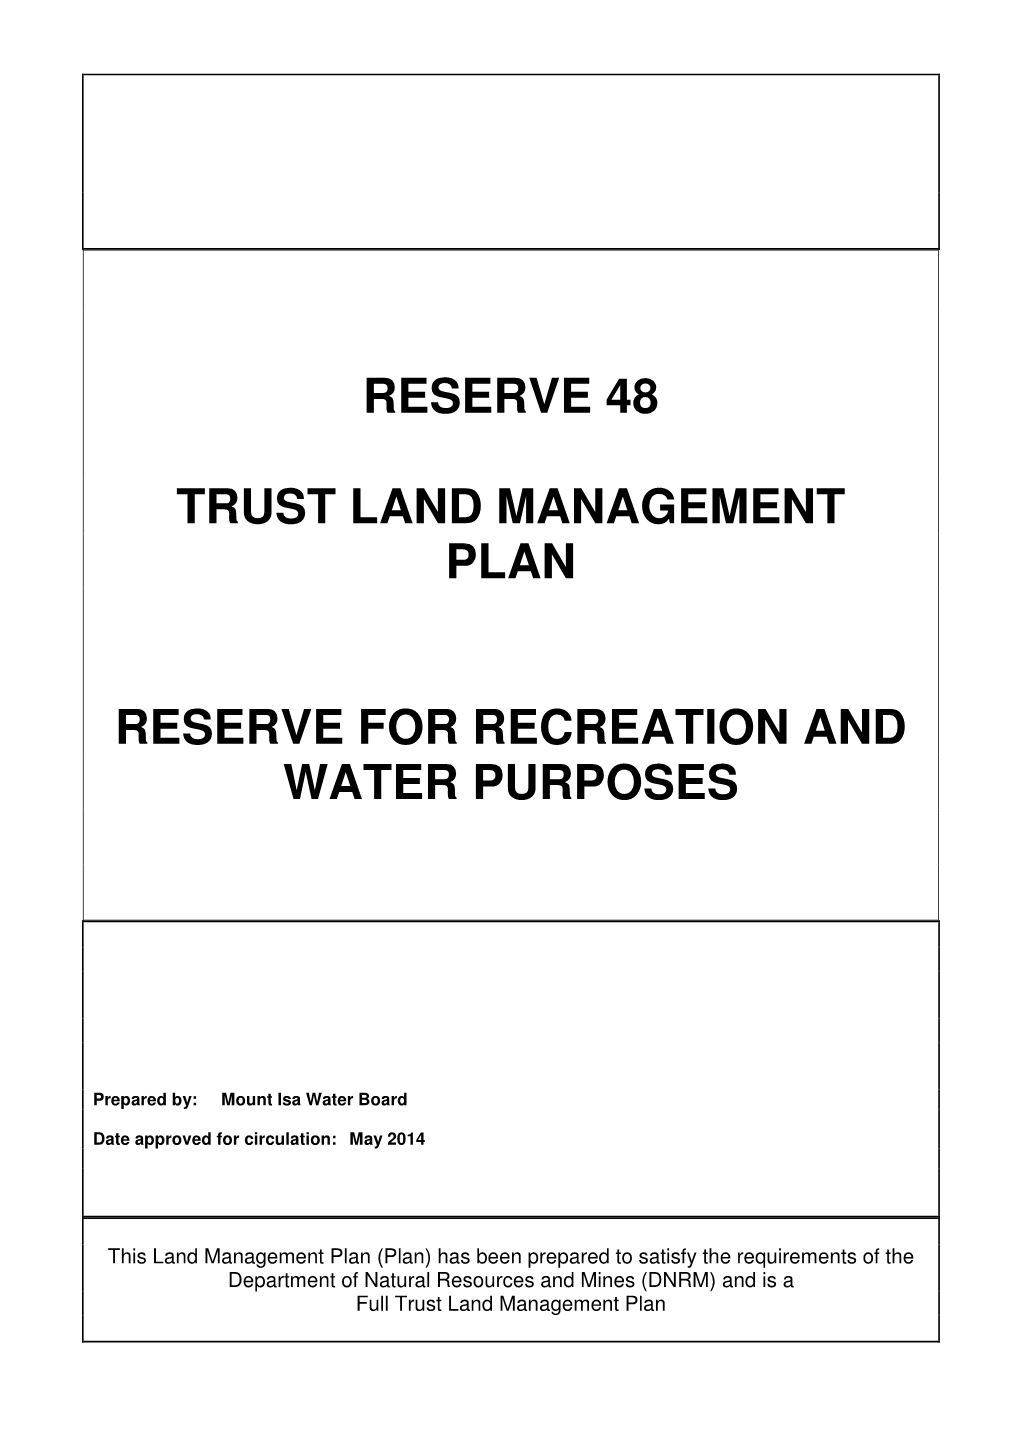 R48 Reserve Land Management Plan